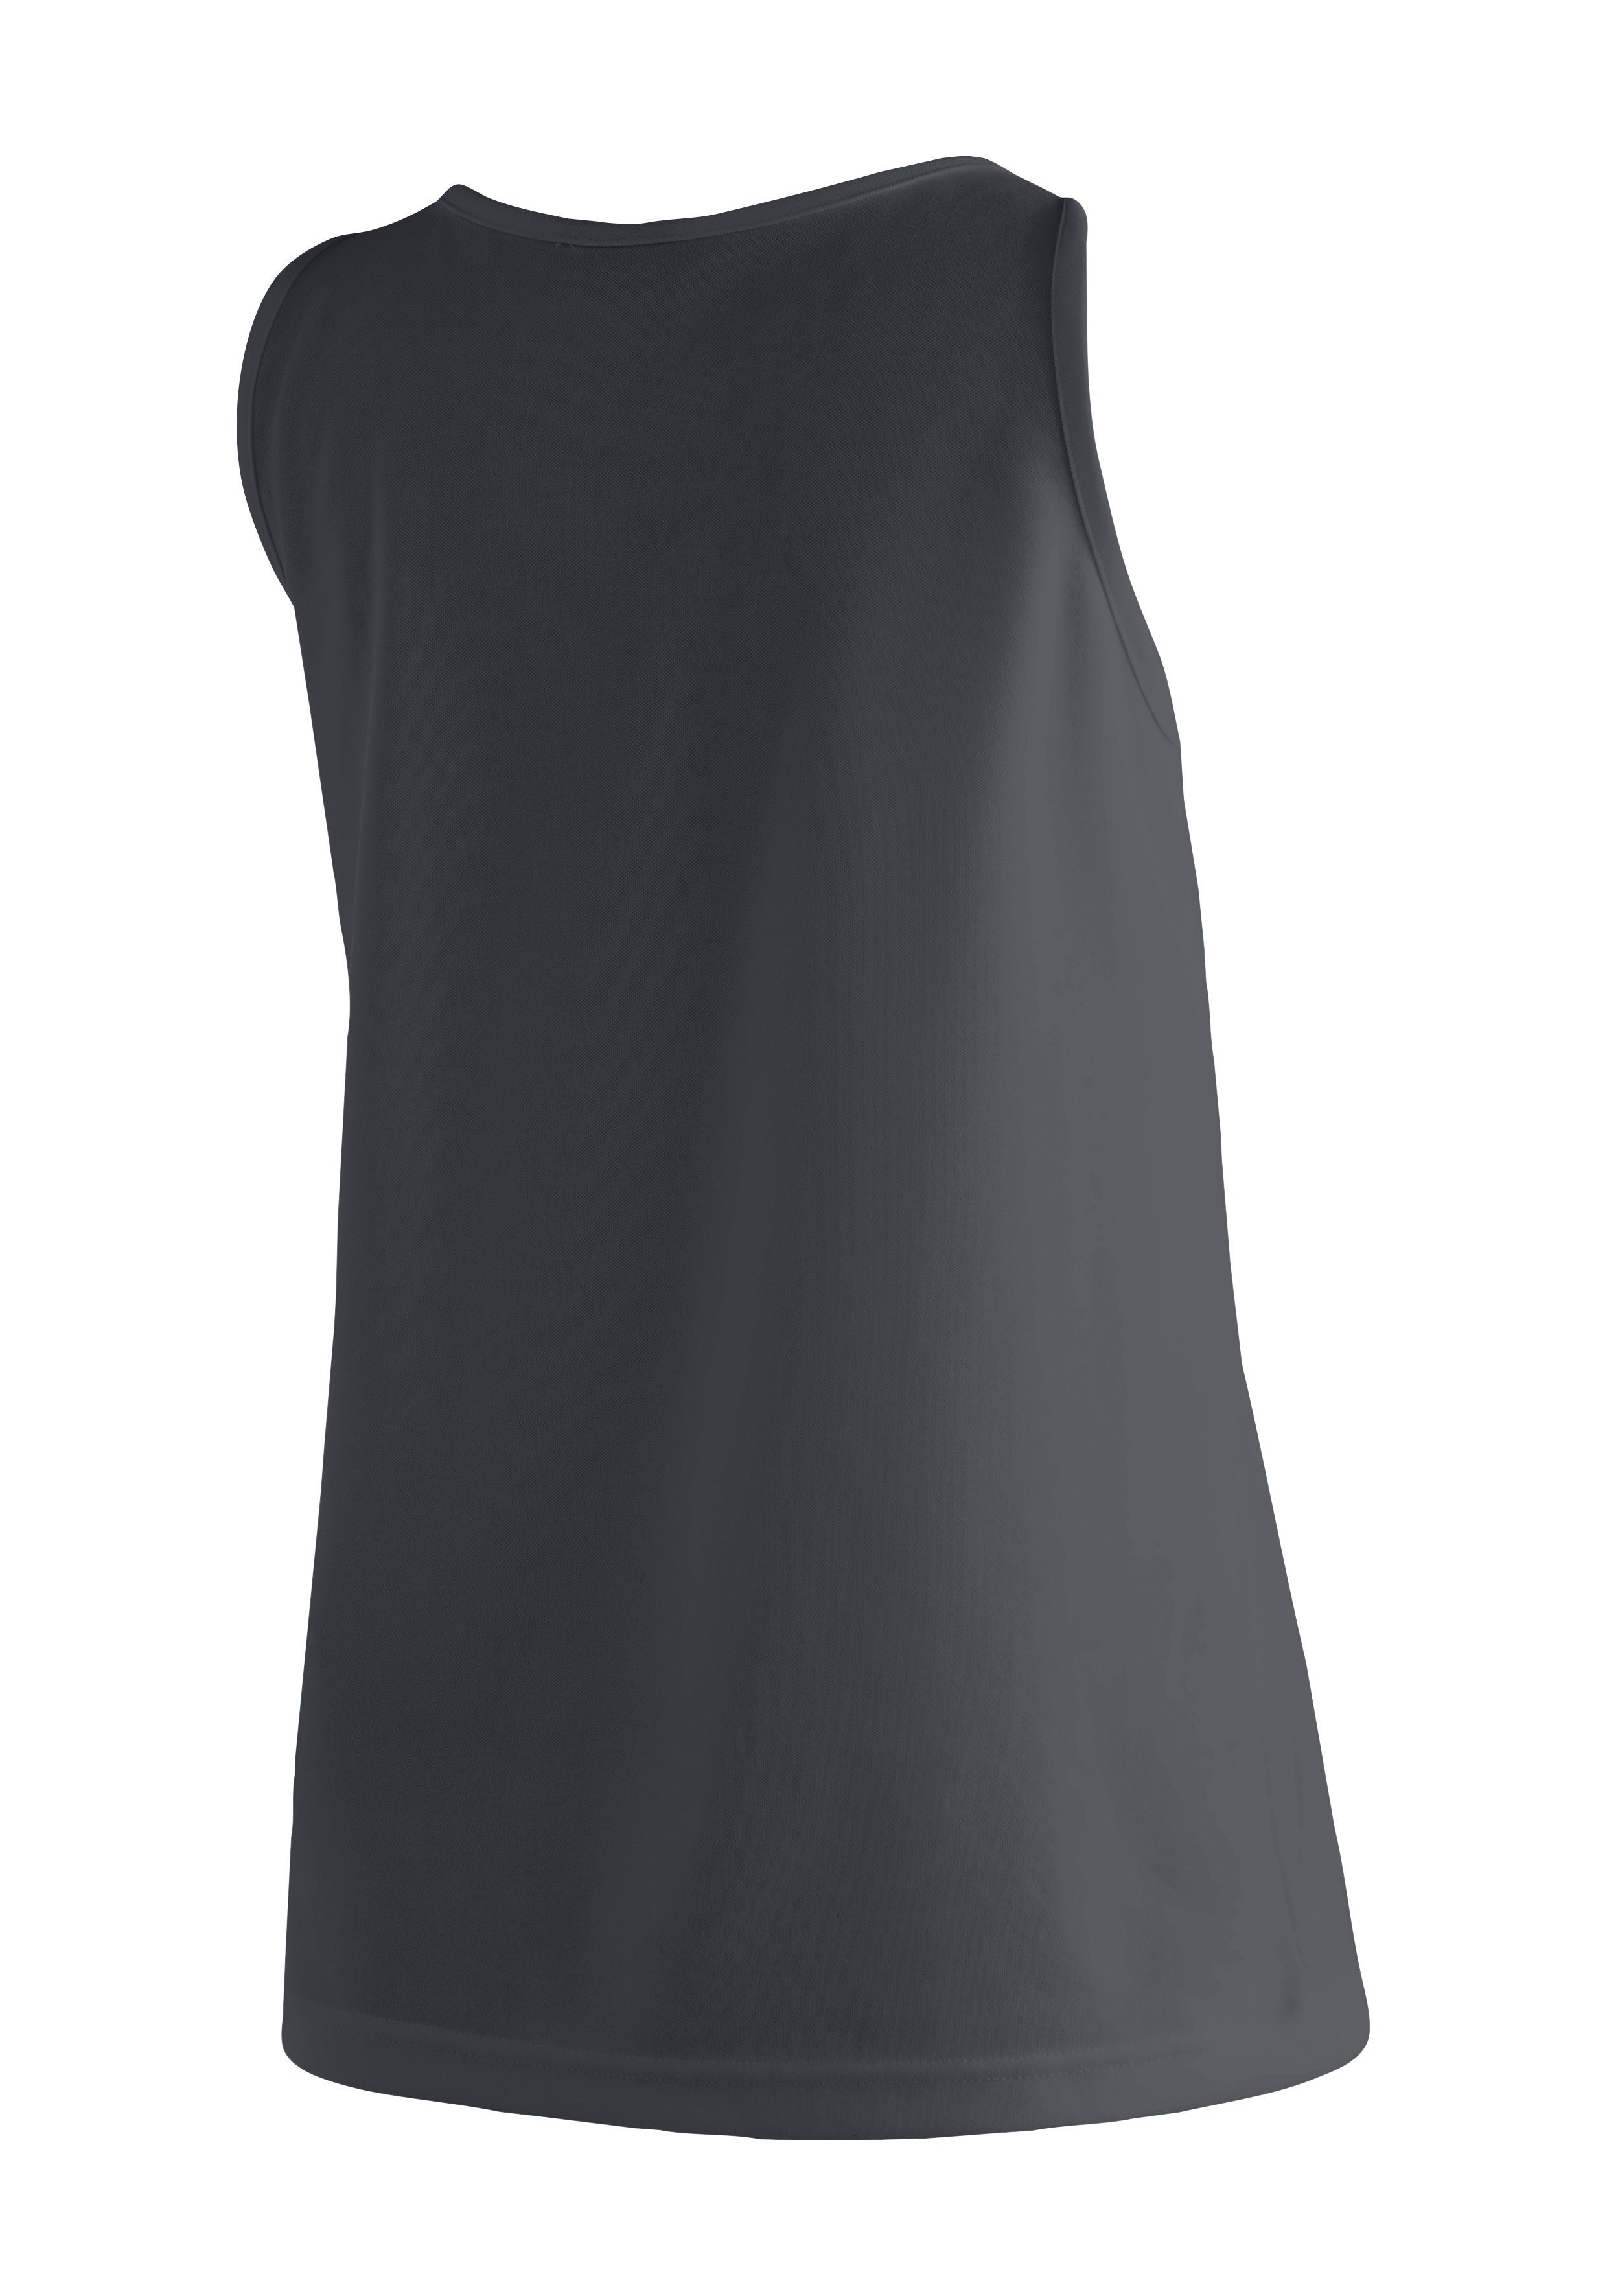 Maier Sports und Funktionsshirt ärmelloses Tank-Top Shirt Damen schwarz Petra für Outdoor-Aktivitäten, Sport